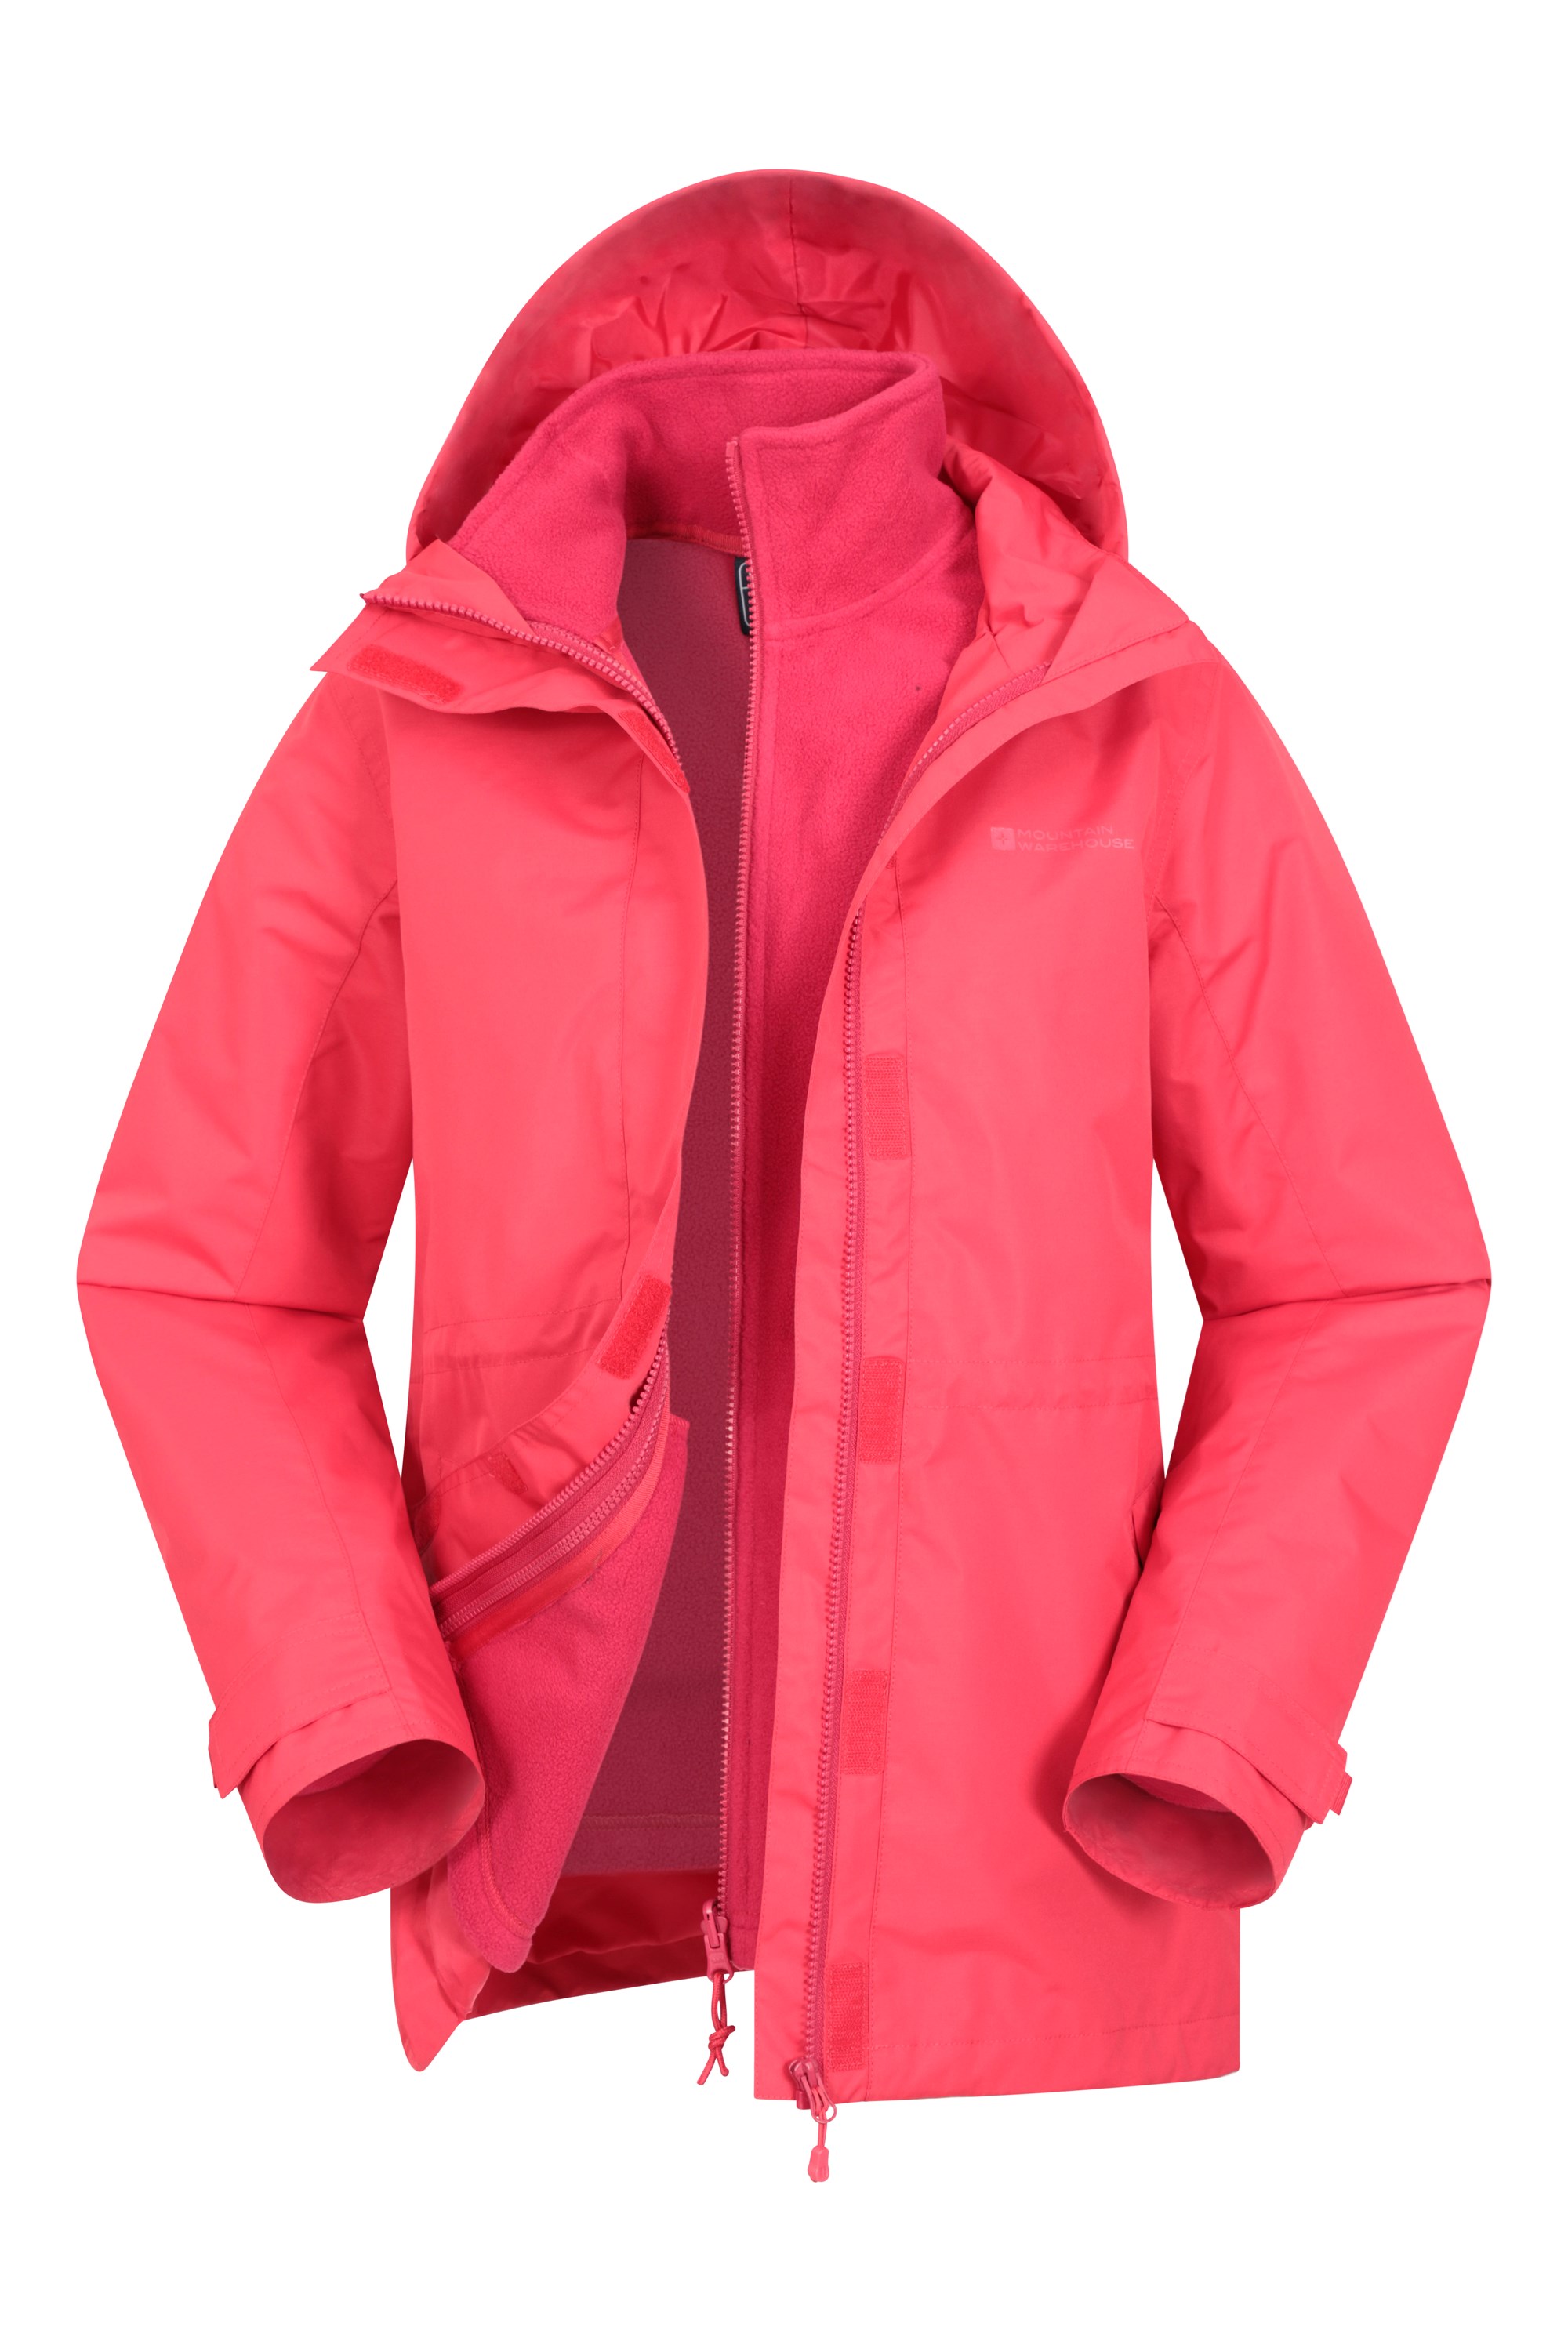 Womens 3 in 1 Mountaineering Jacket Two-pieces Windproof Coat Wear-resistant Fleece Rain Jacket for Autumn and Winter Warm Zip Pockets Jackets 